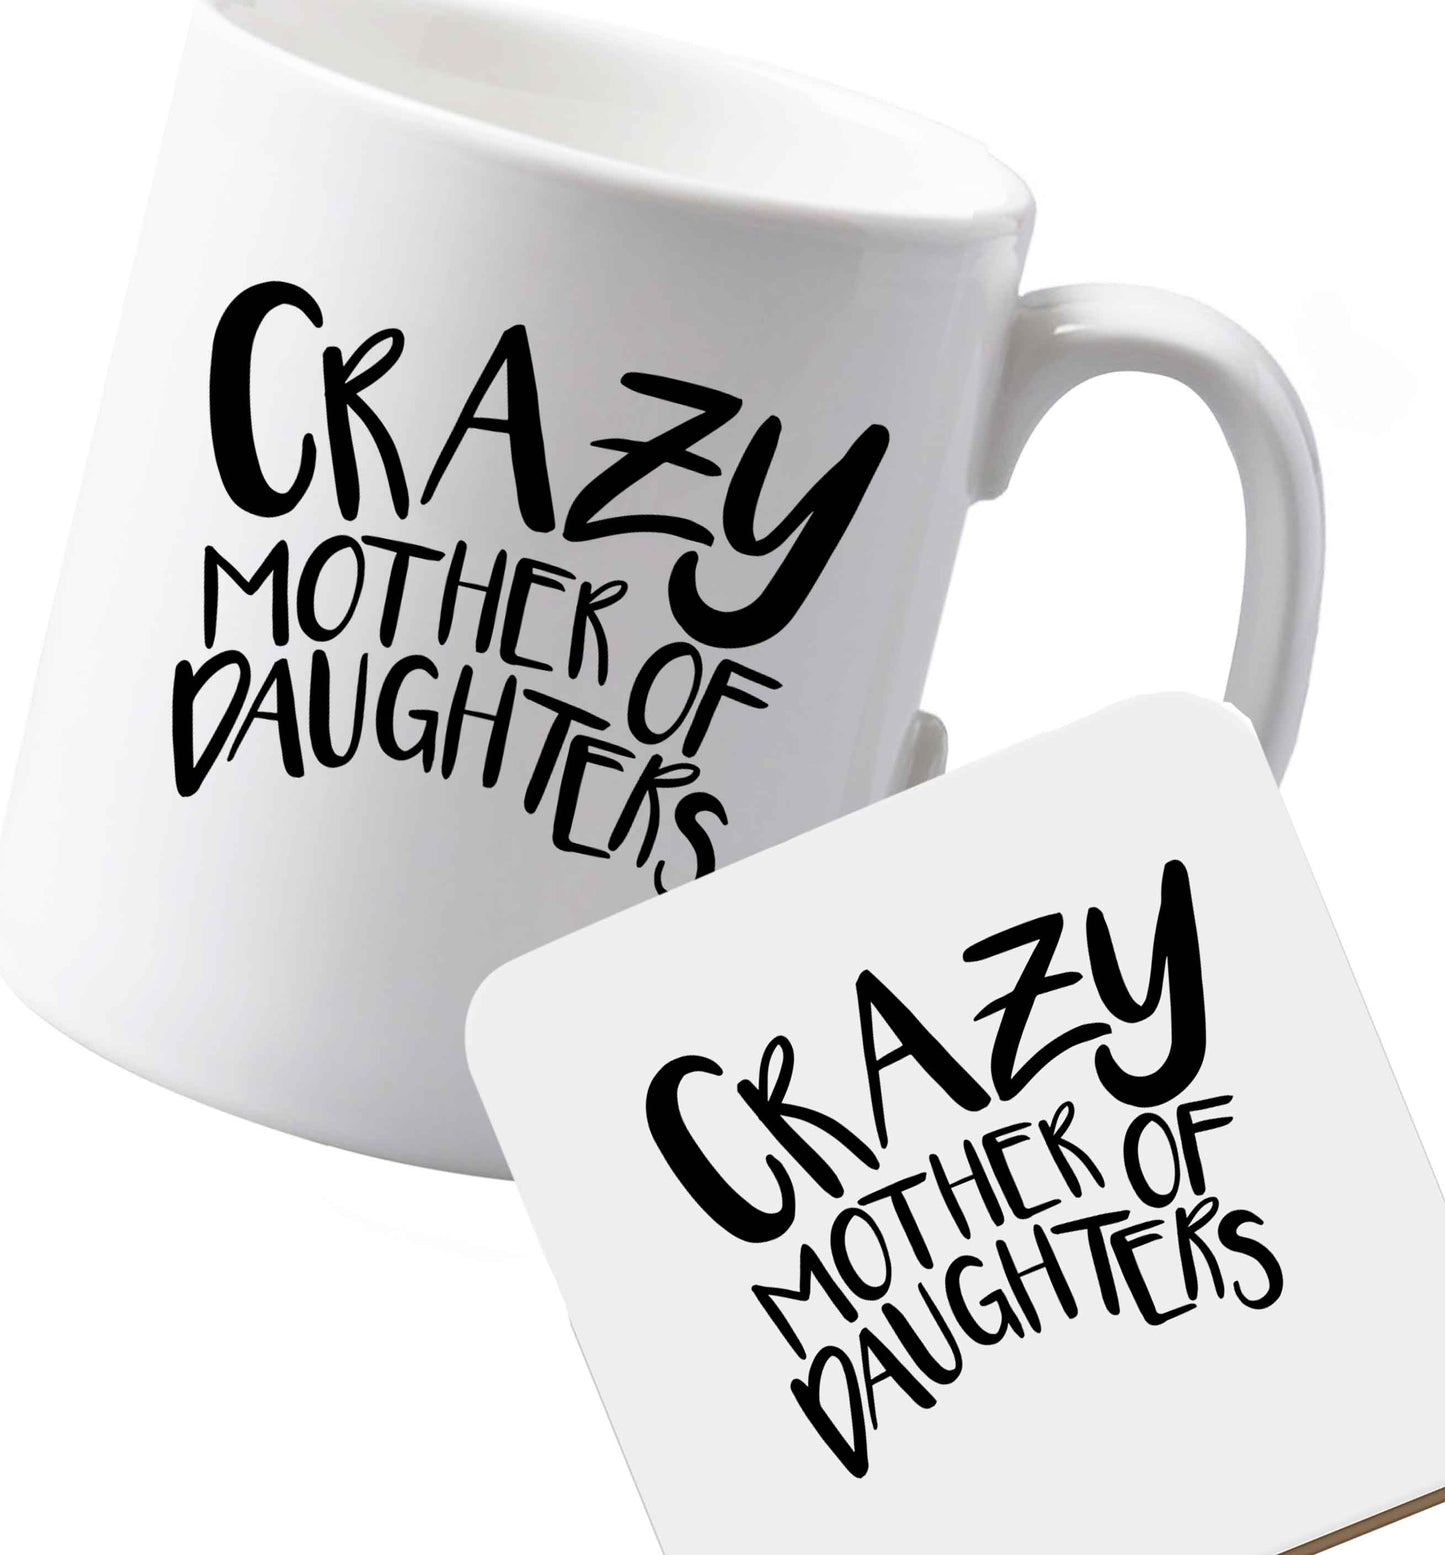 10 oz Ceramic mug and coaster Crazy mother of daughters both sides